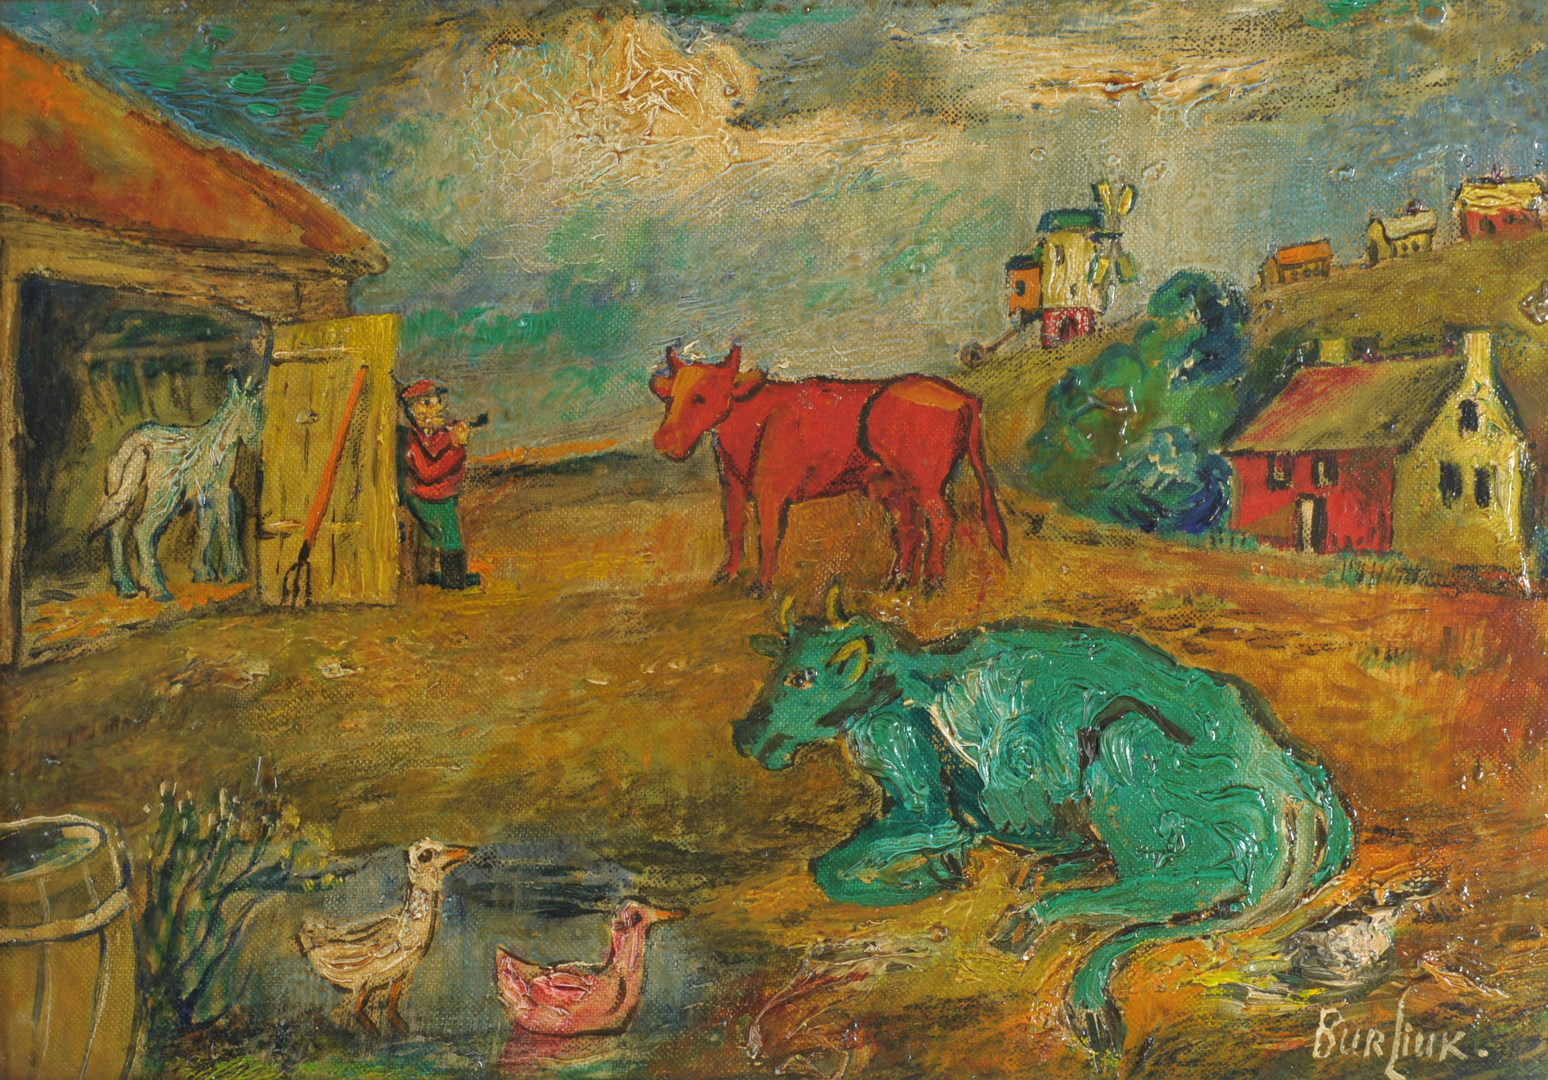 Lot 155: David Burliuk painting of farm with cows